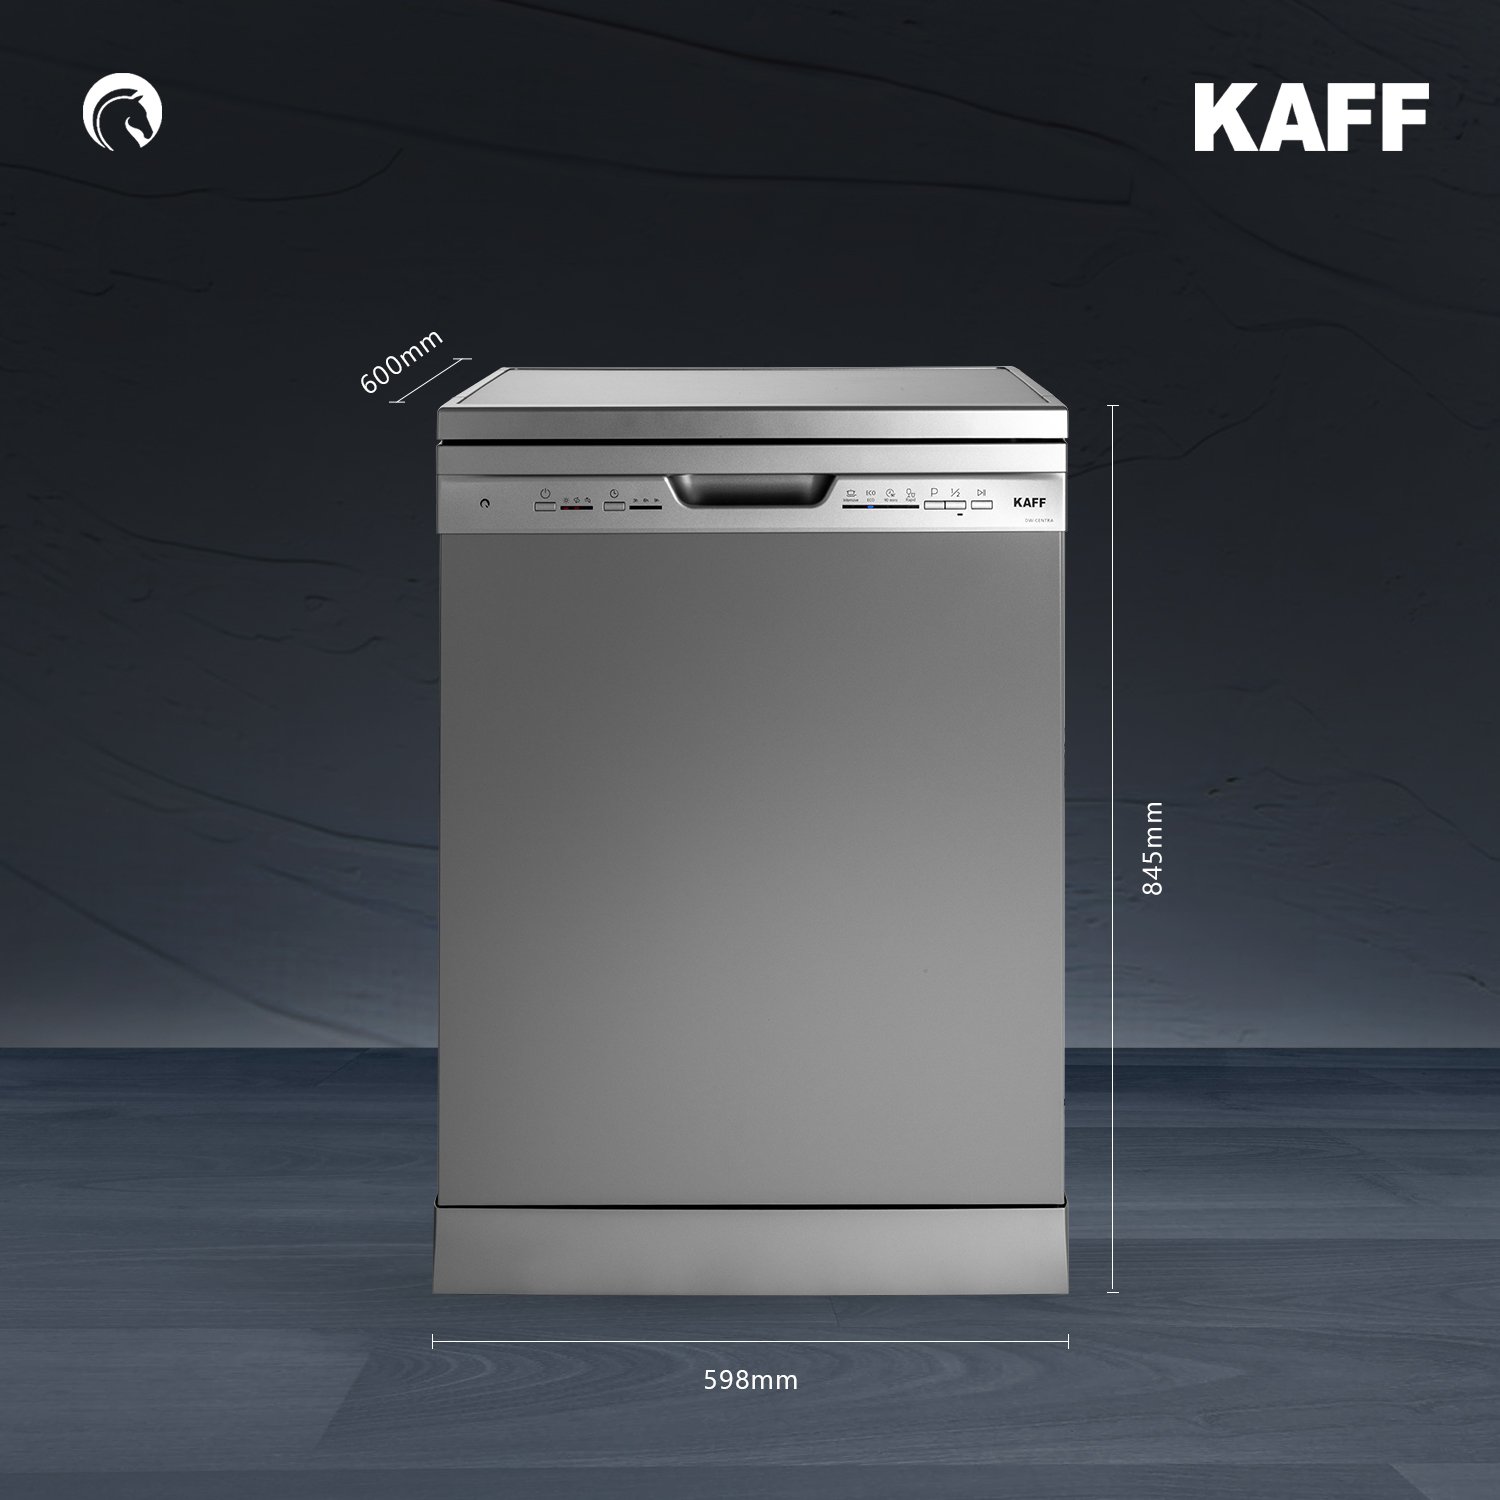 kaff dishwasher